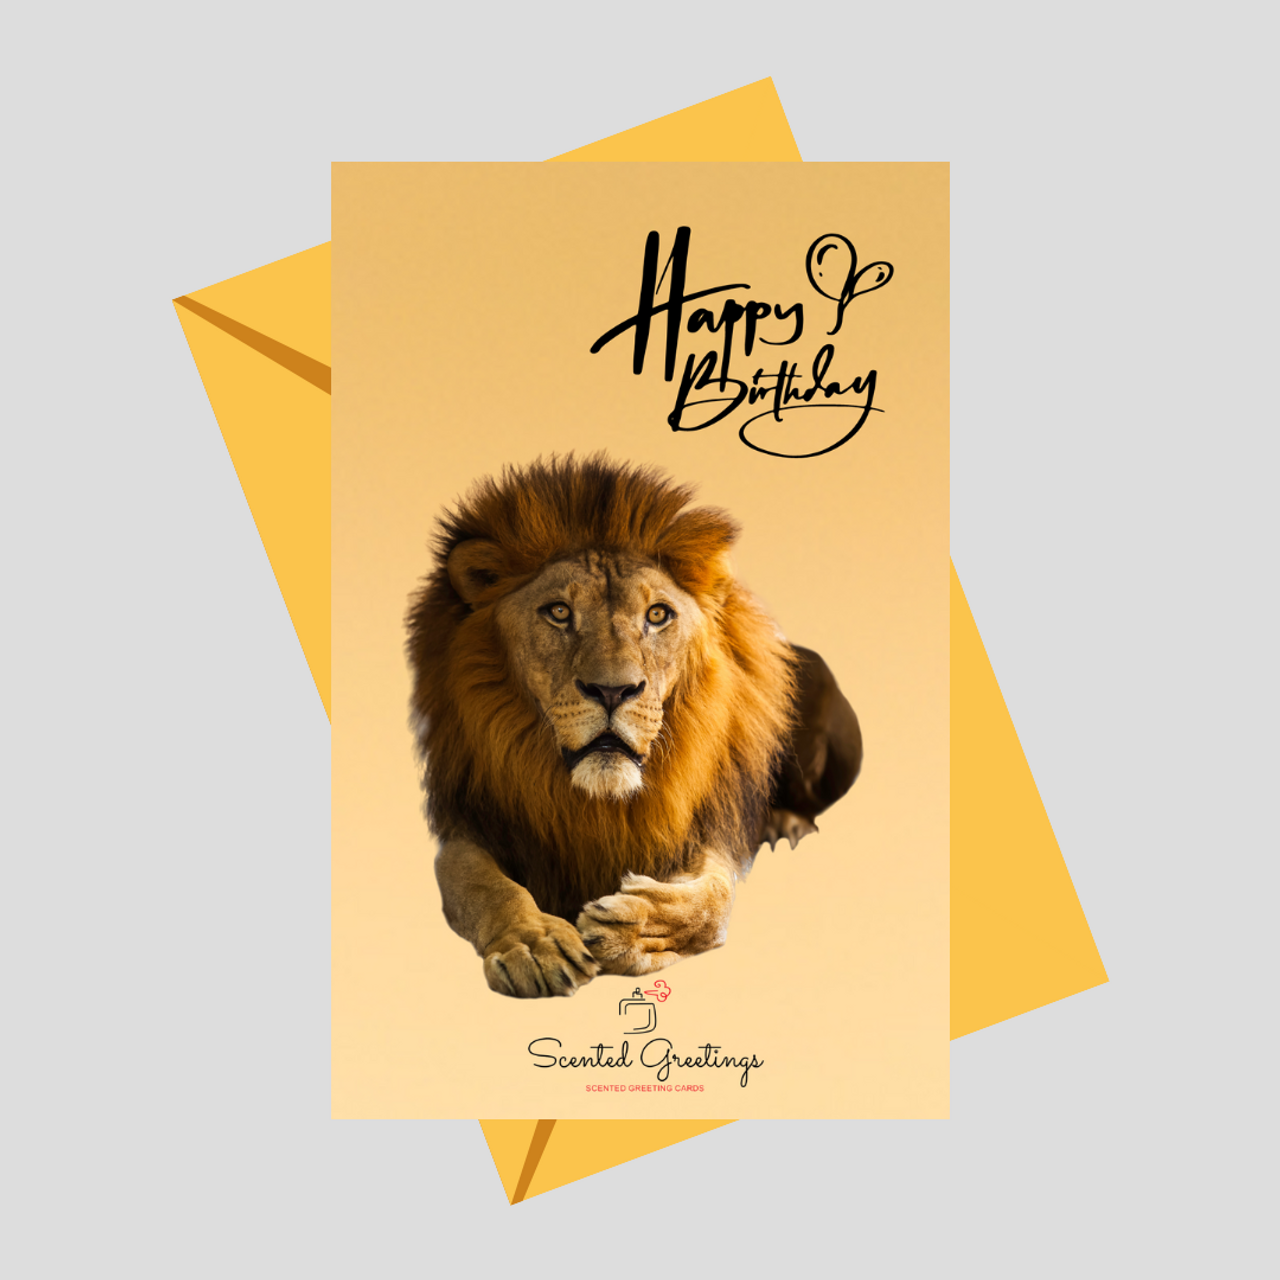 Happy Birthday Lion | Scented Greeting Cards - Bath Bombs | Best Bath ...